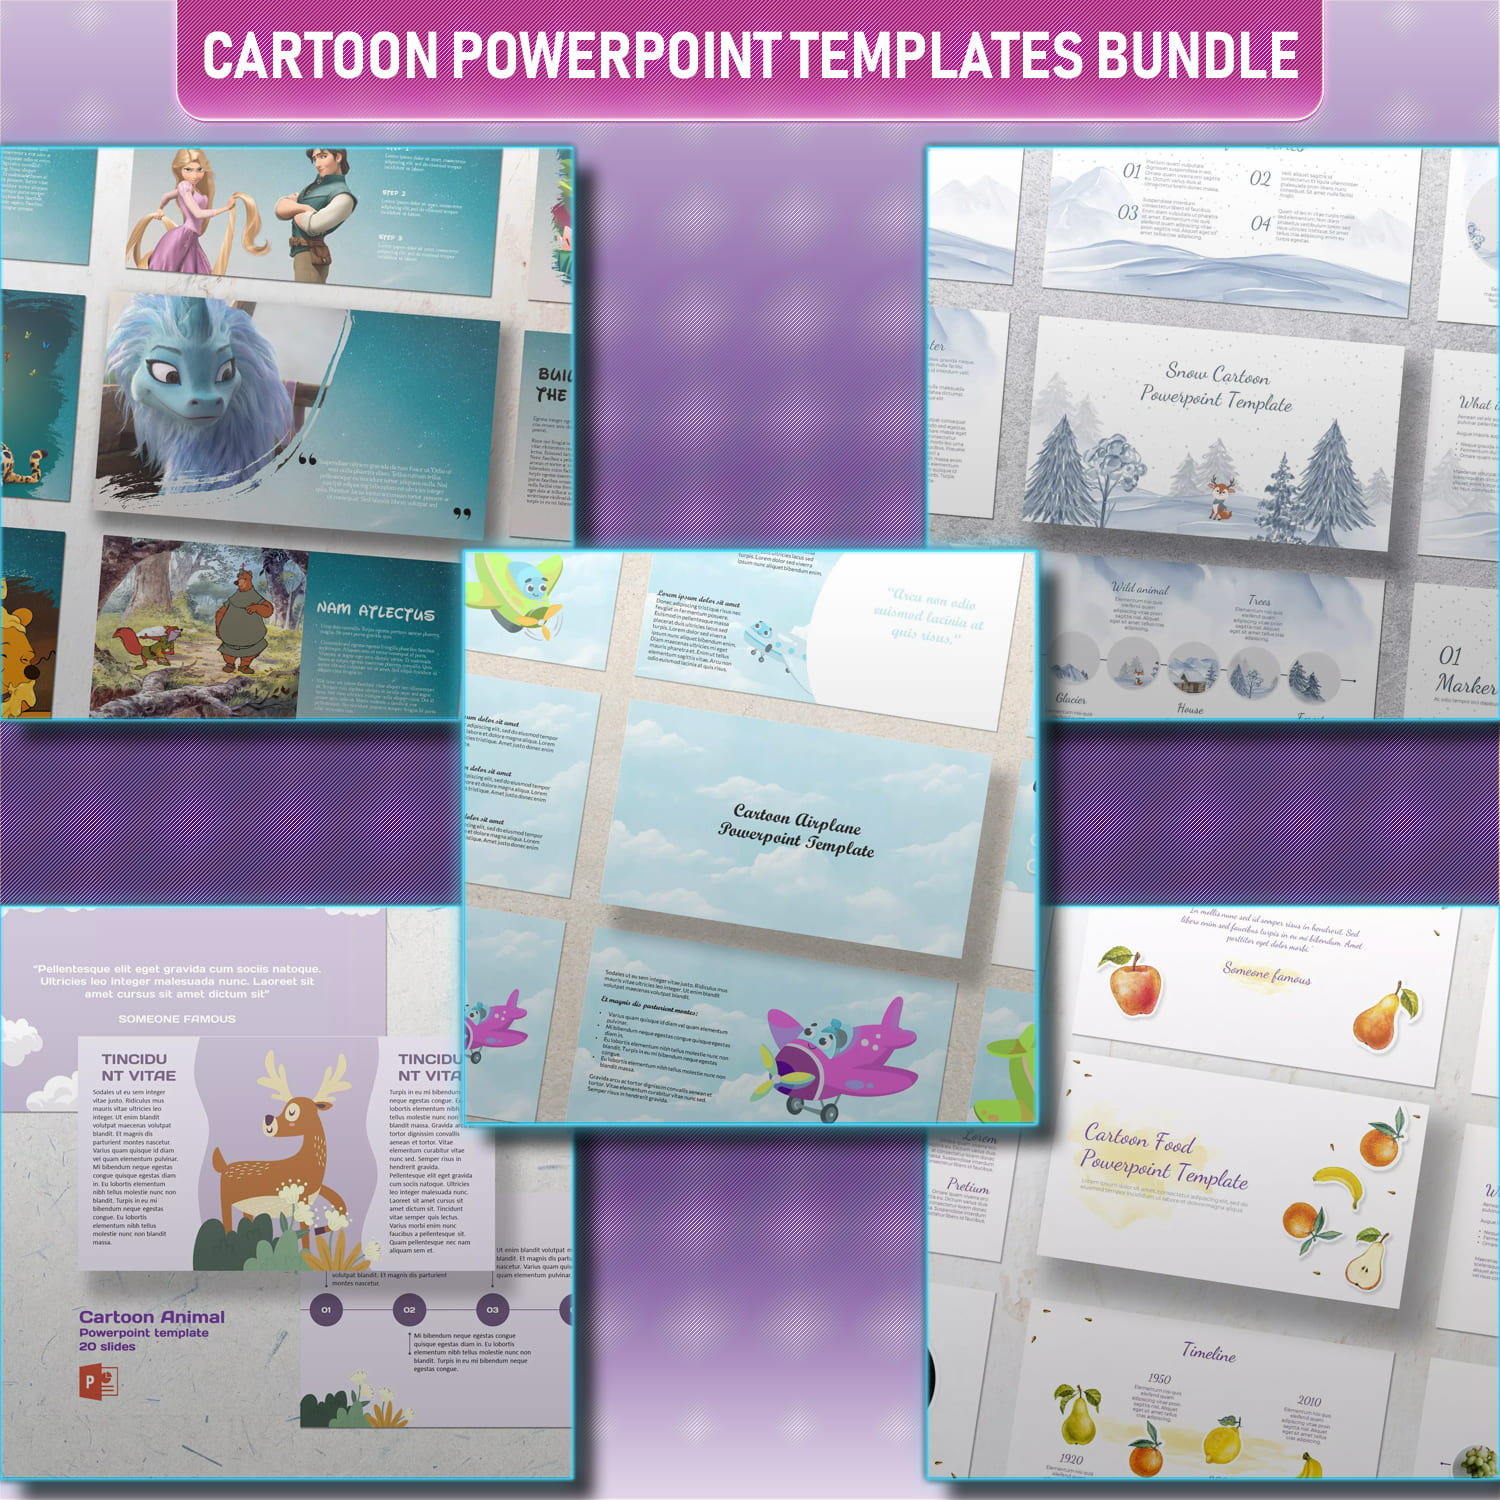 Preview cartoon powerpoint templates bundle.